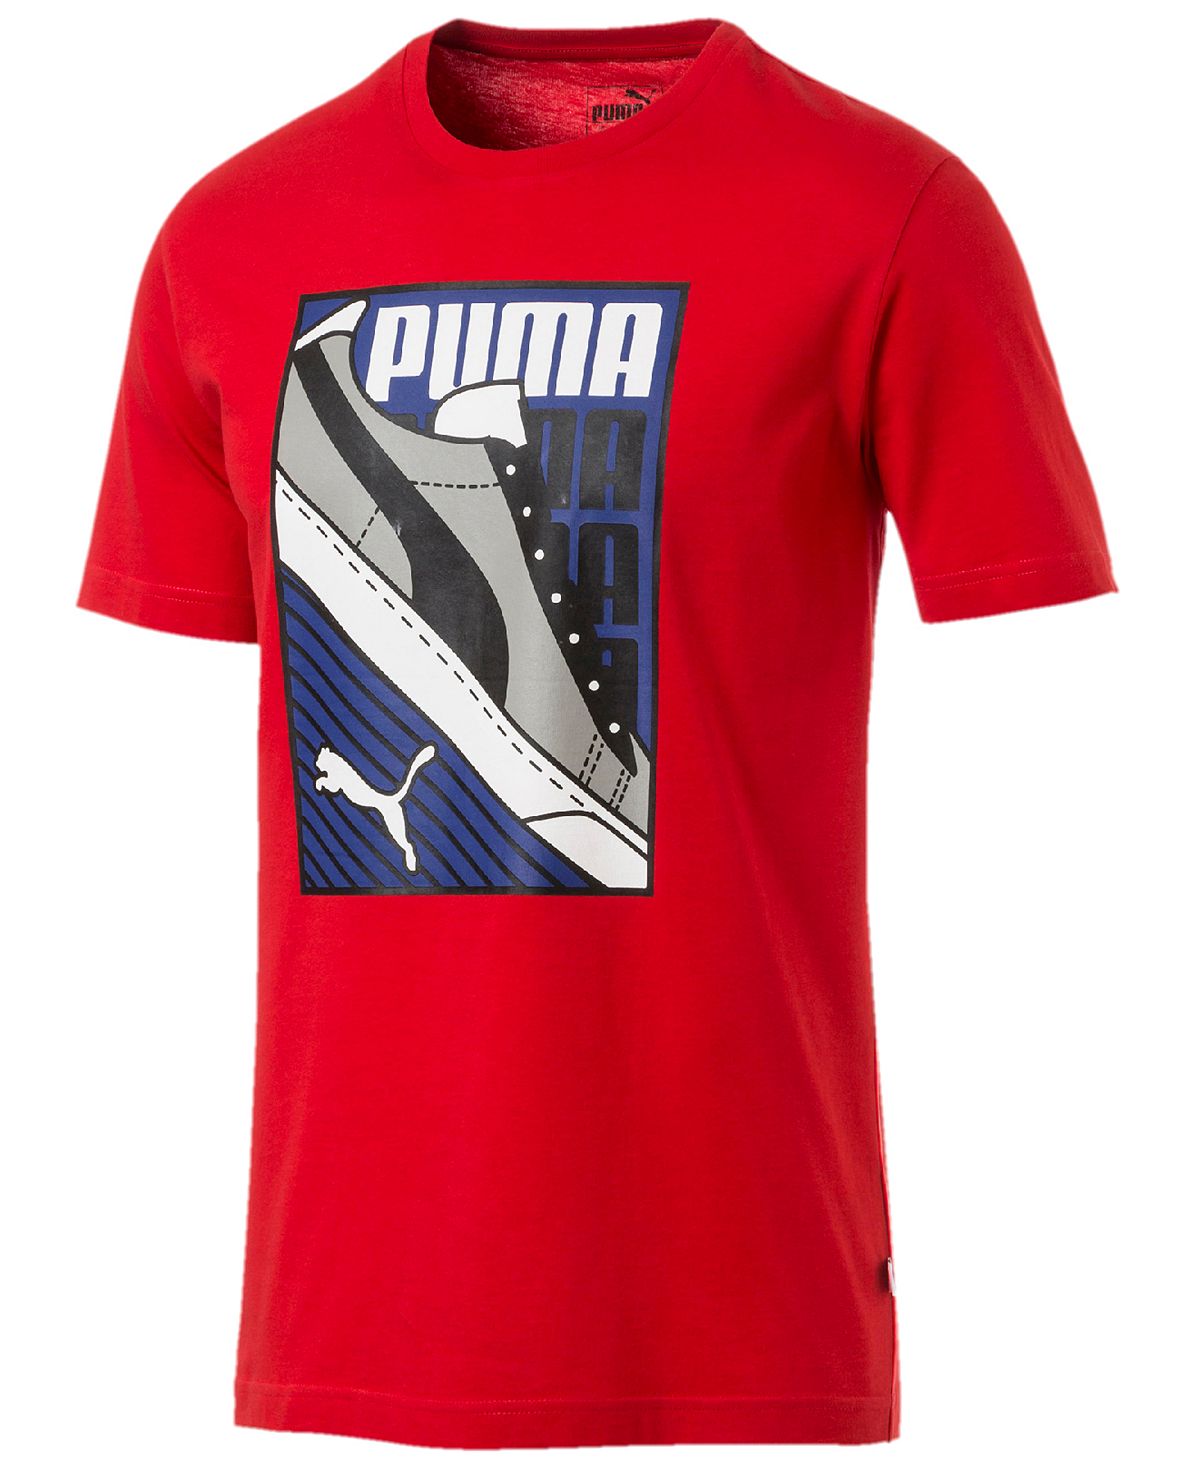 Puma Graphic T-shirt Hi Risk Red